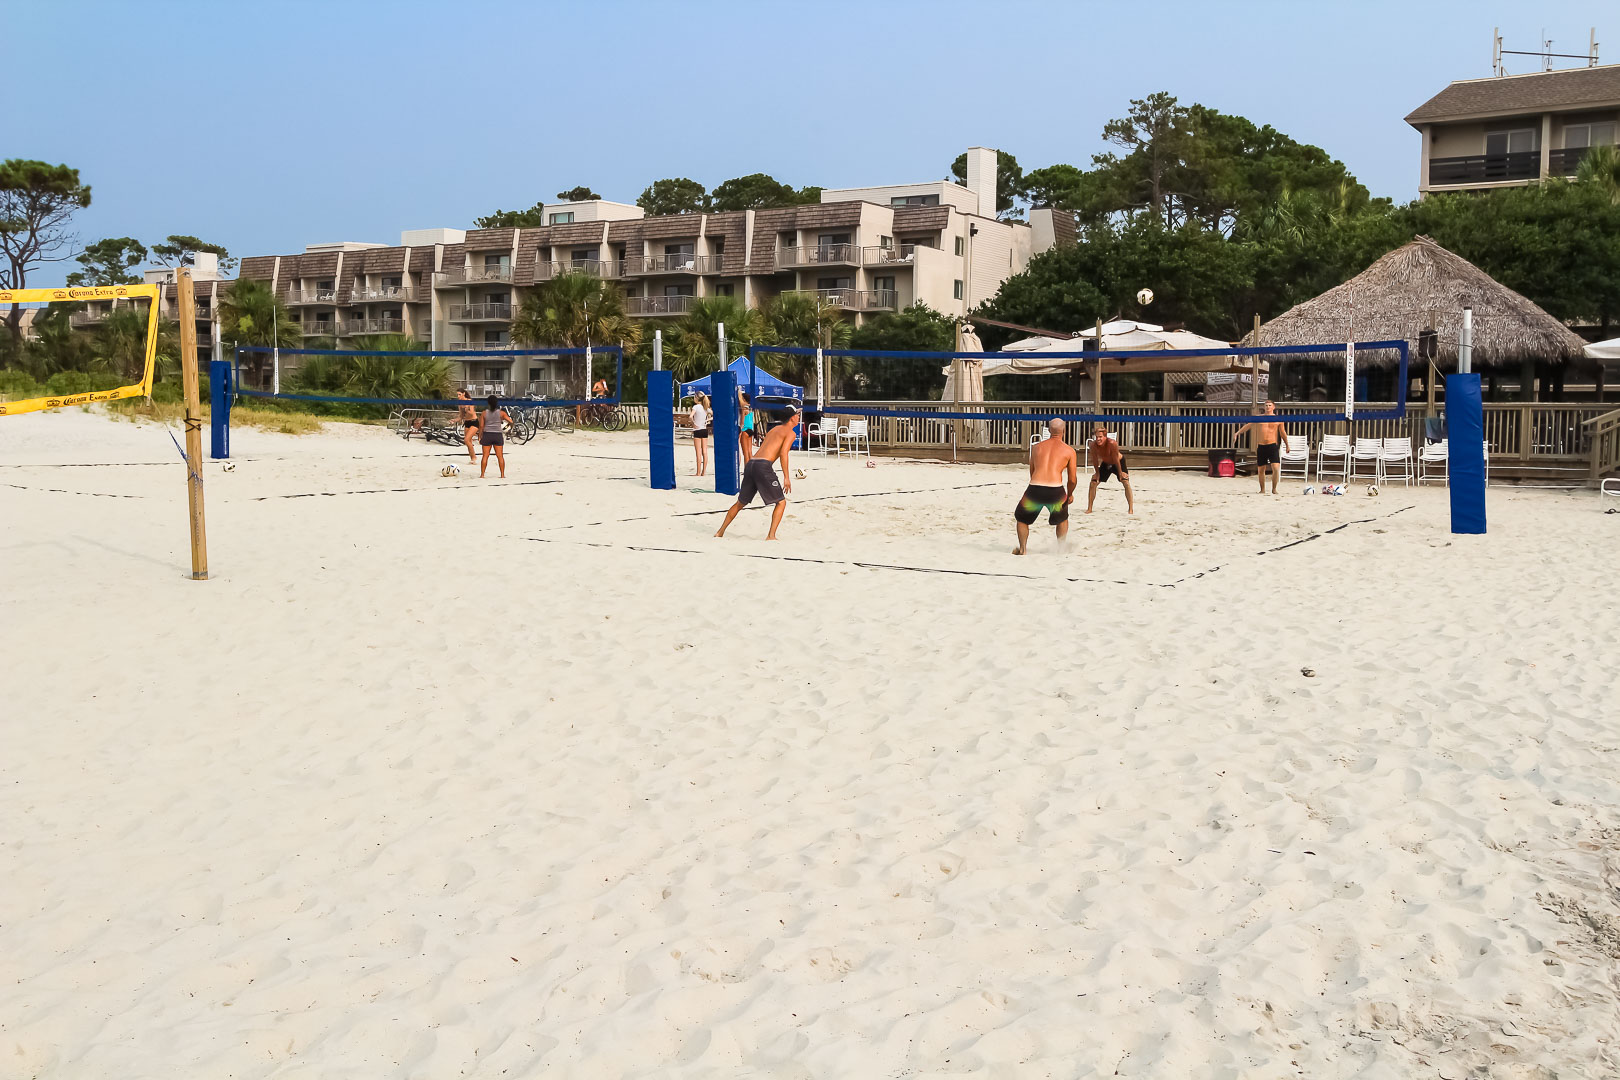 A beach view from VRI's Players Club Resort in Hilton Head Island, South Carolina.